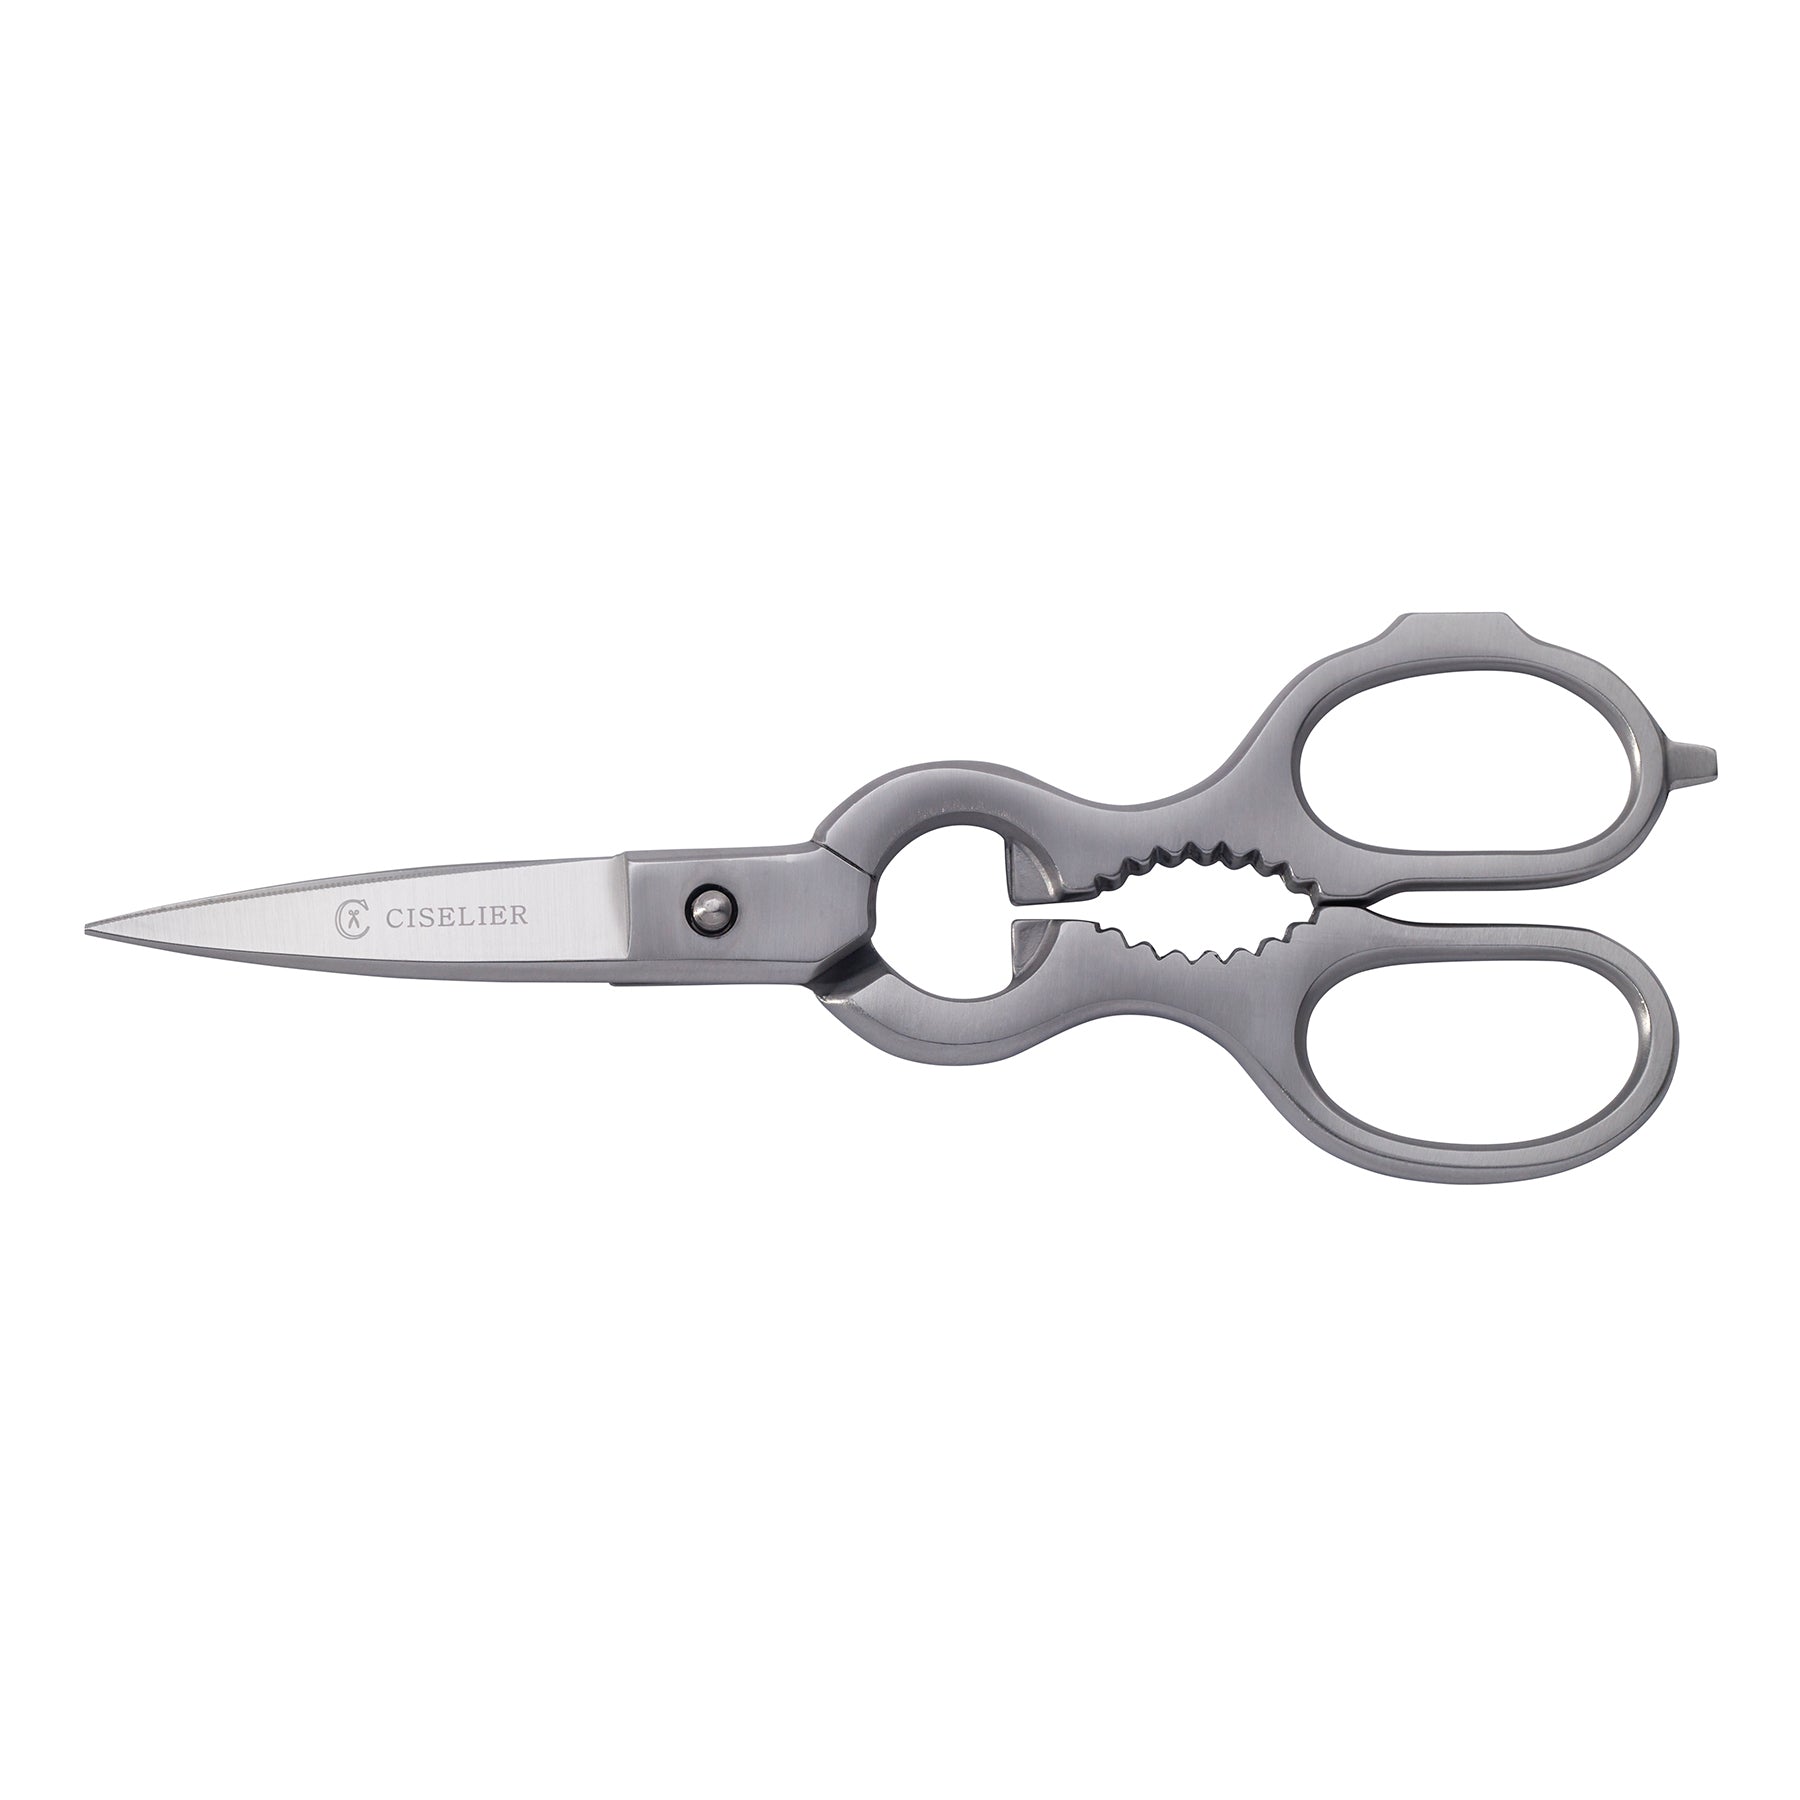 Quality scissors belong in your kitchen